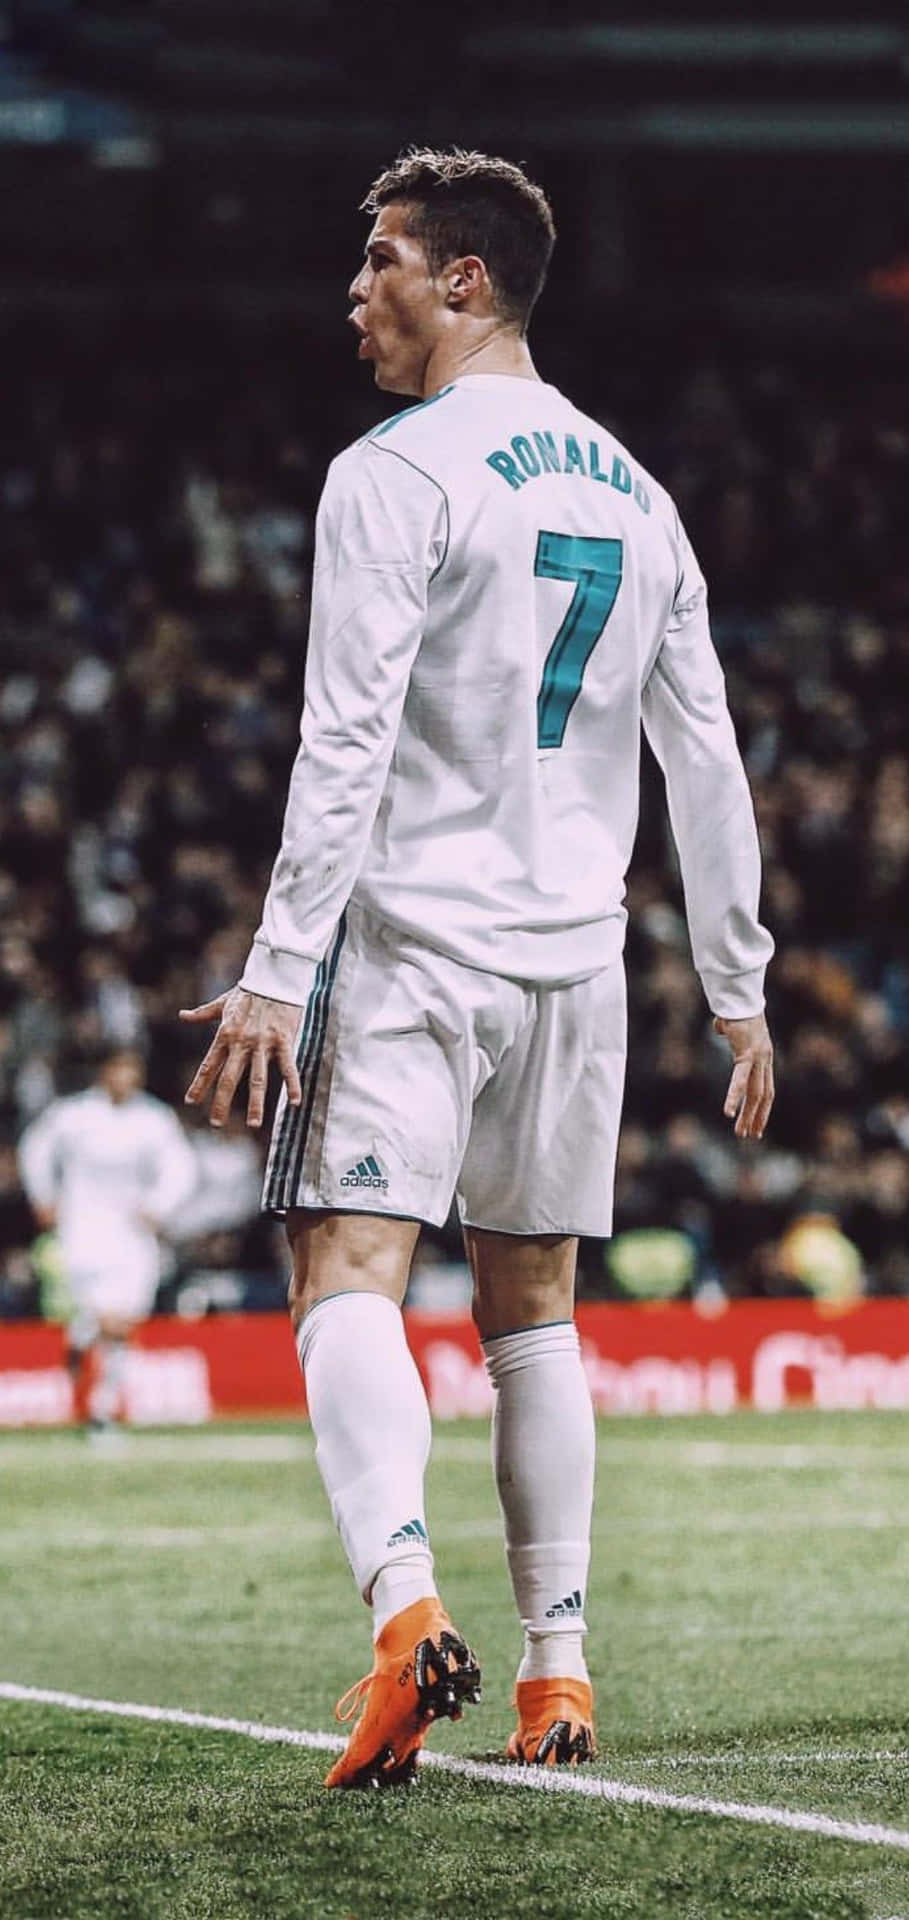 Weltberühmtercristiano Ronaldo In Aktion Auf Dem Fußballplatz Wallpaper